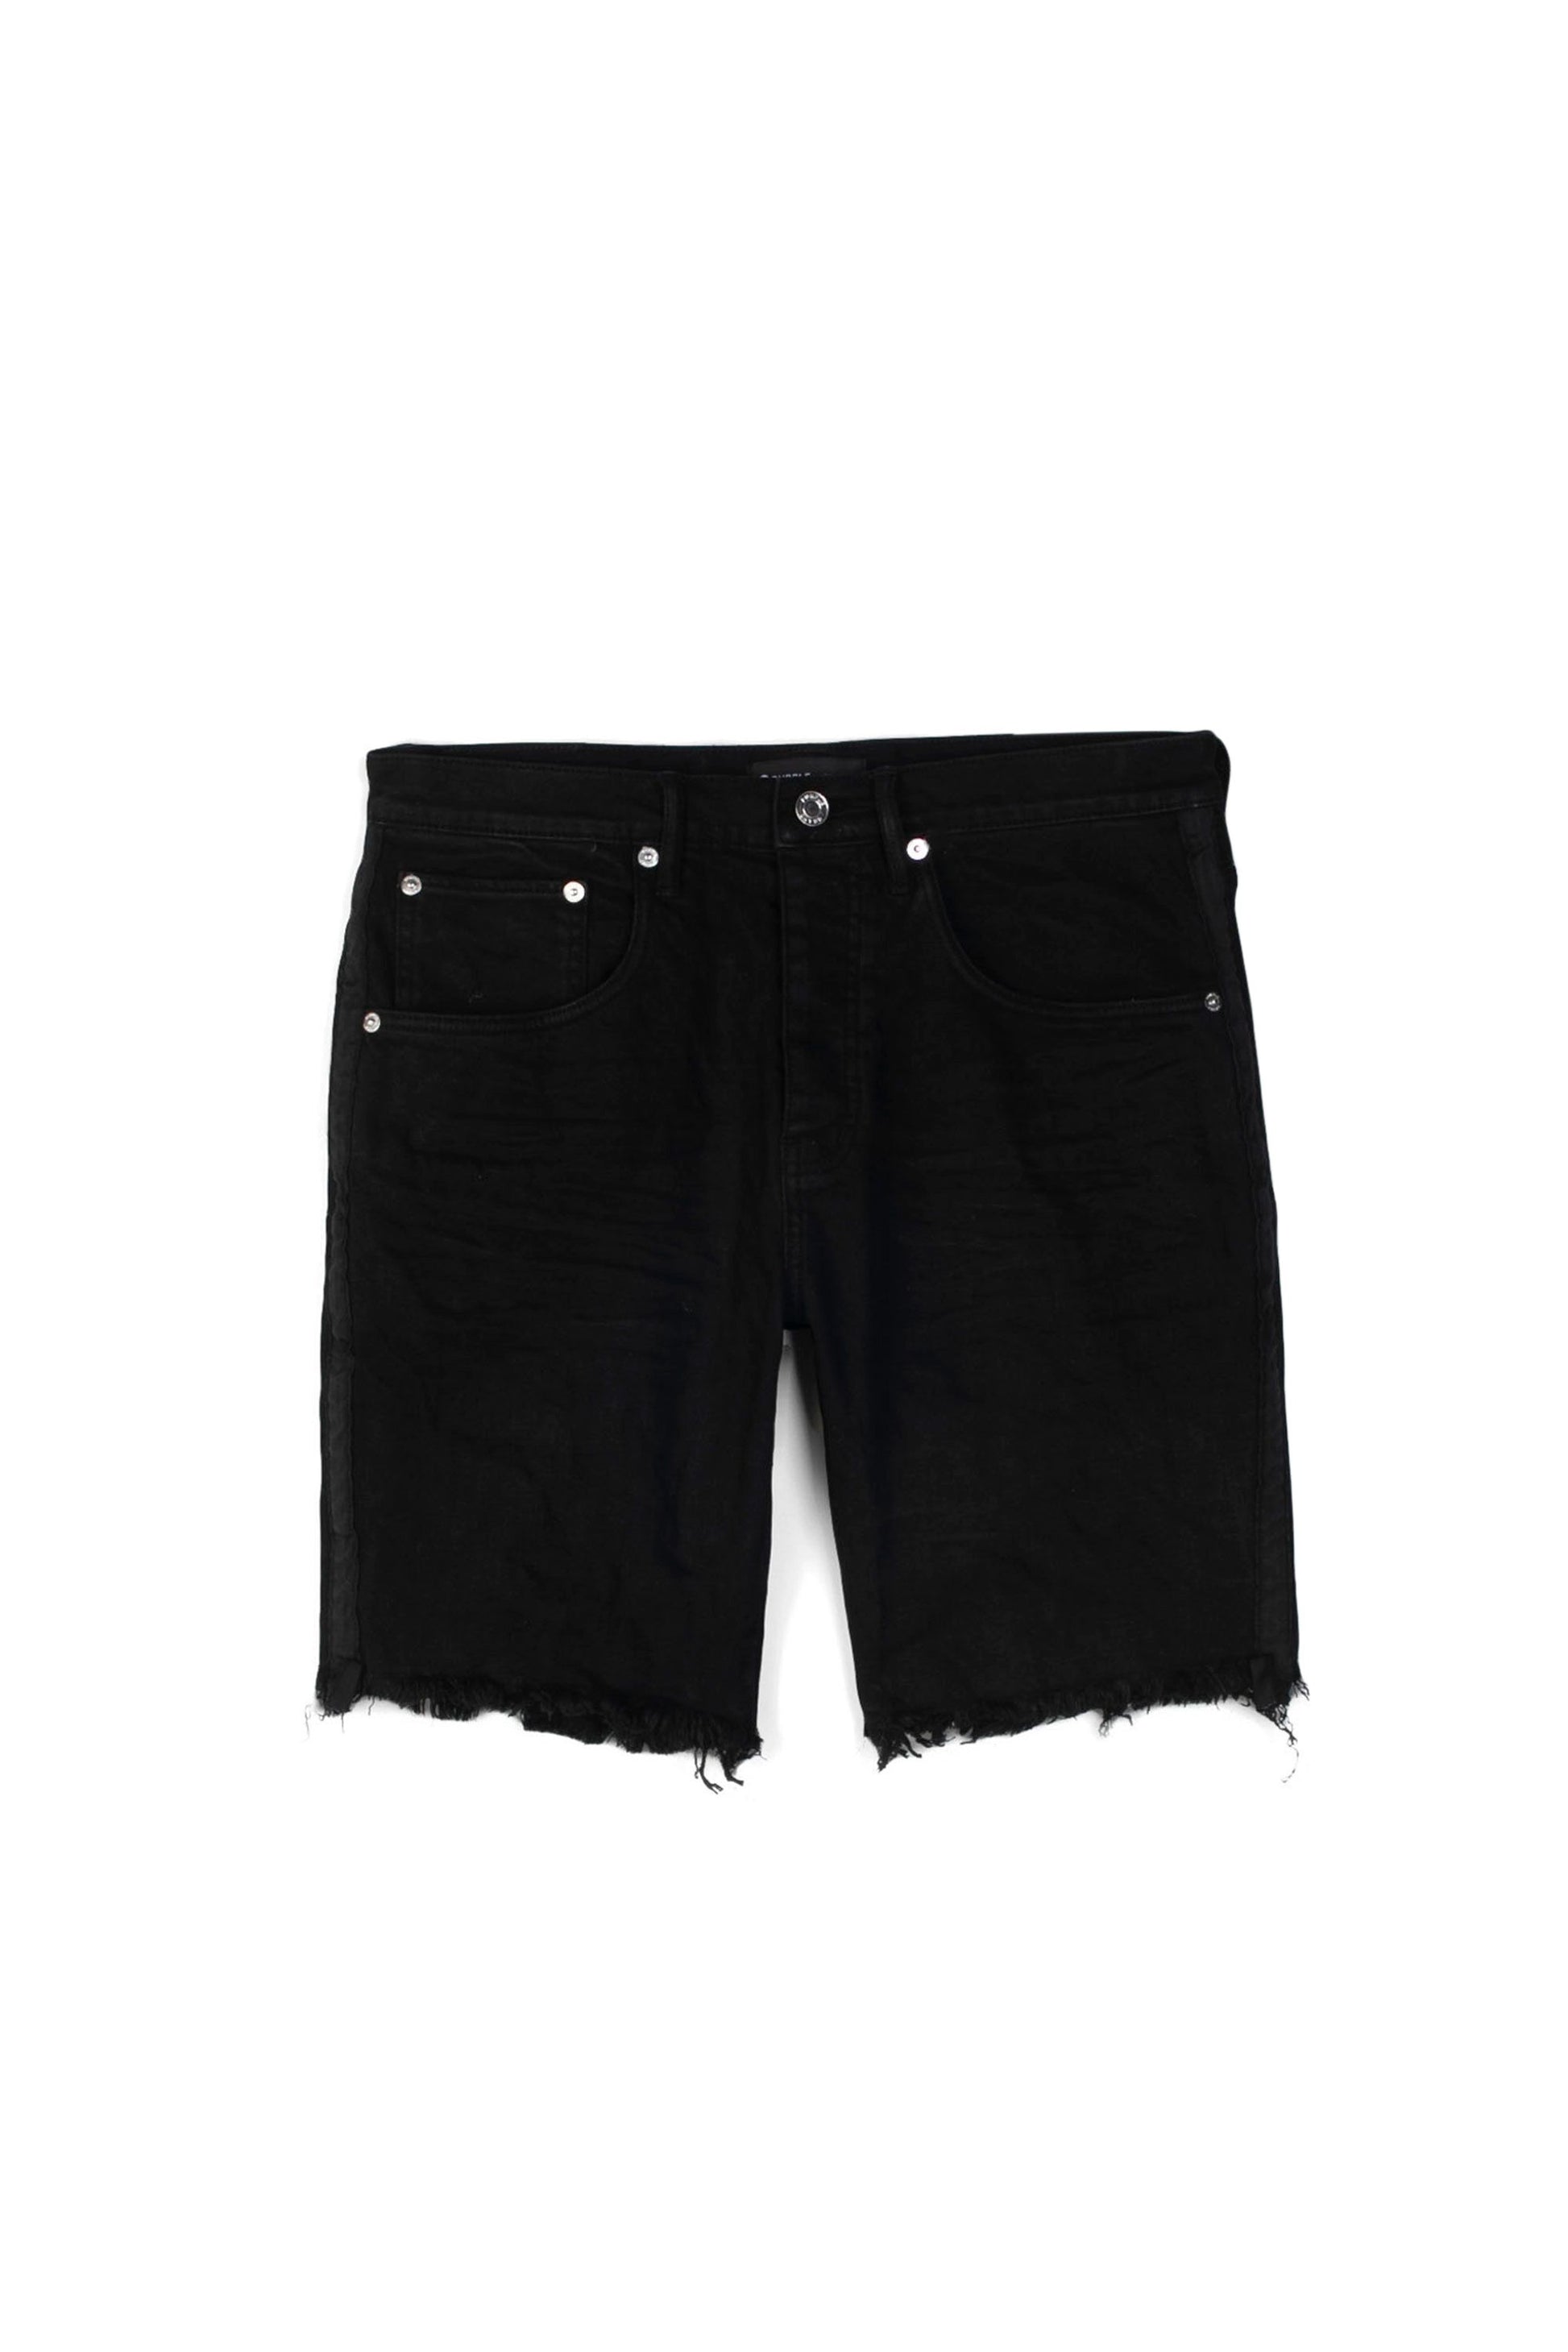 PURPLE BRAND - Men's Denim Jean Short - Mid Rise Short - Style No. P020 - Grosgrain Tuxedo Stripe Black - Front